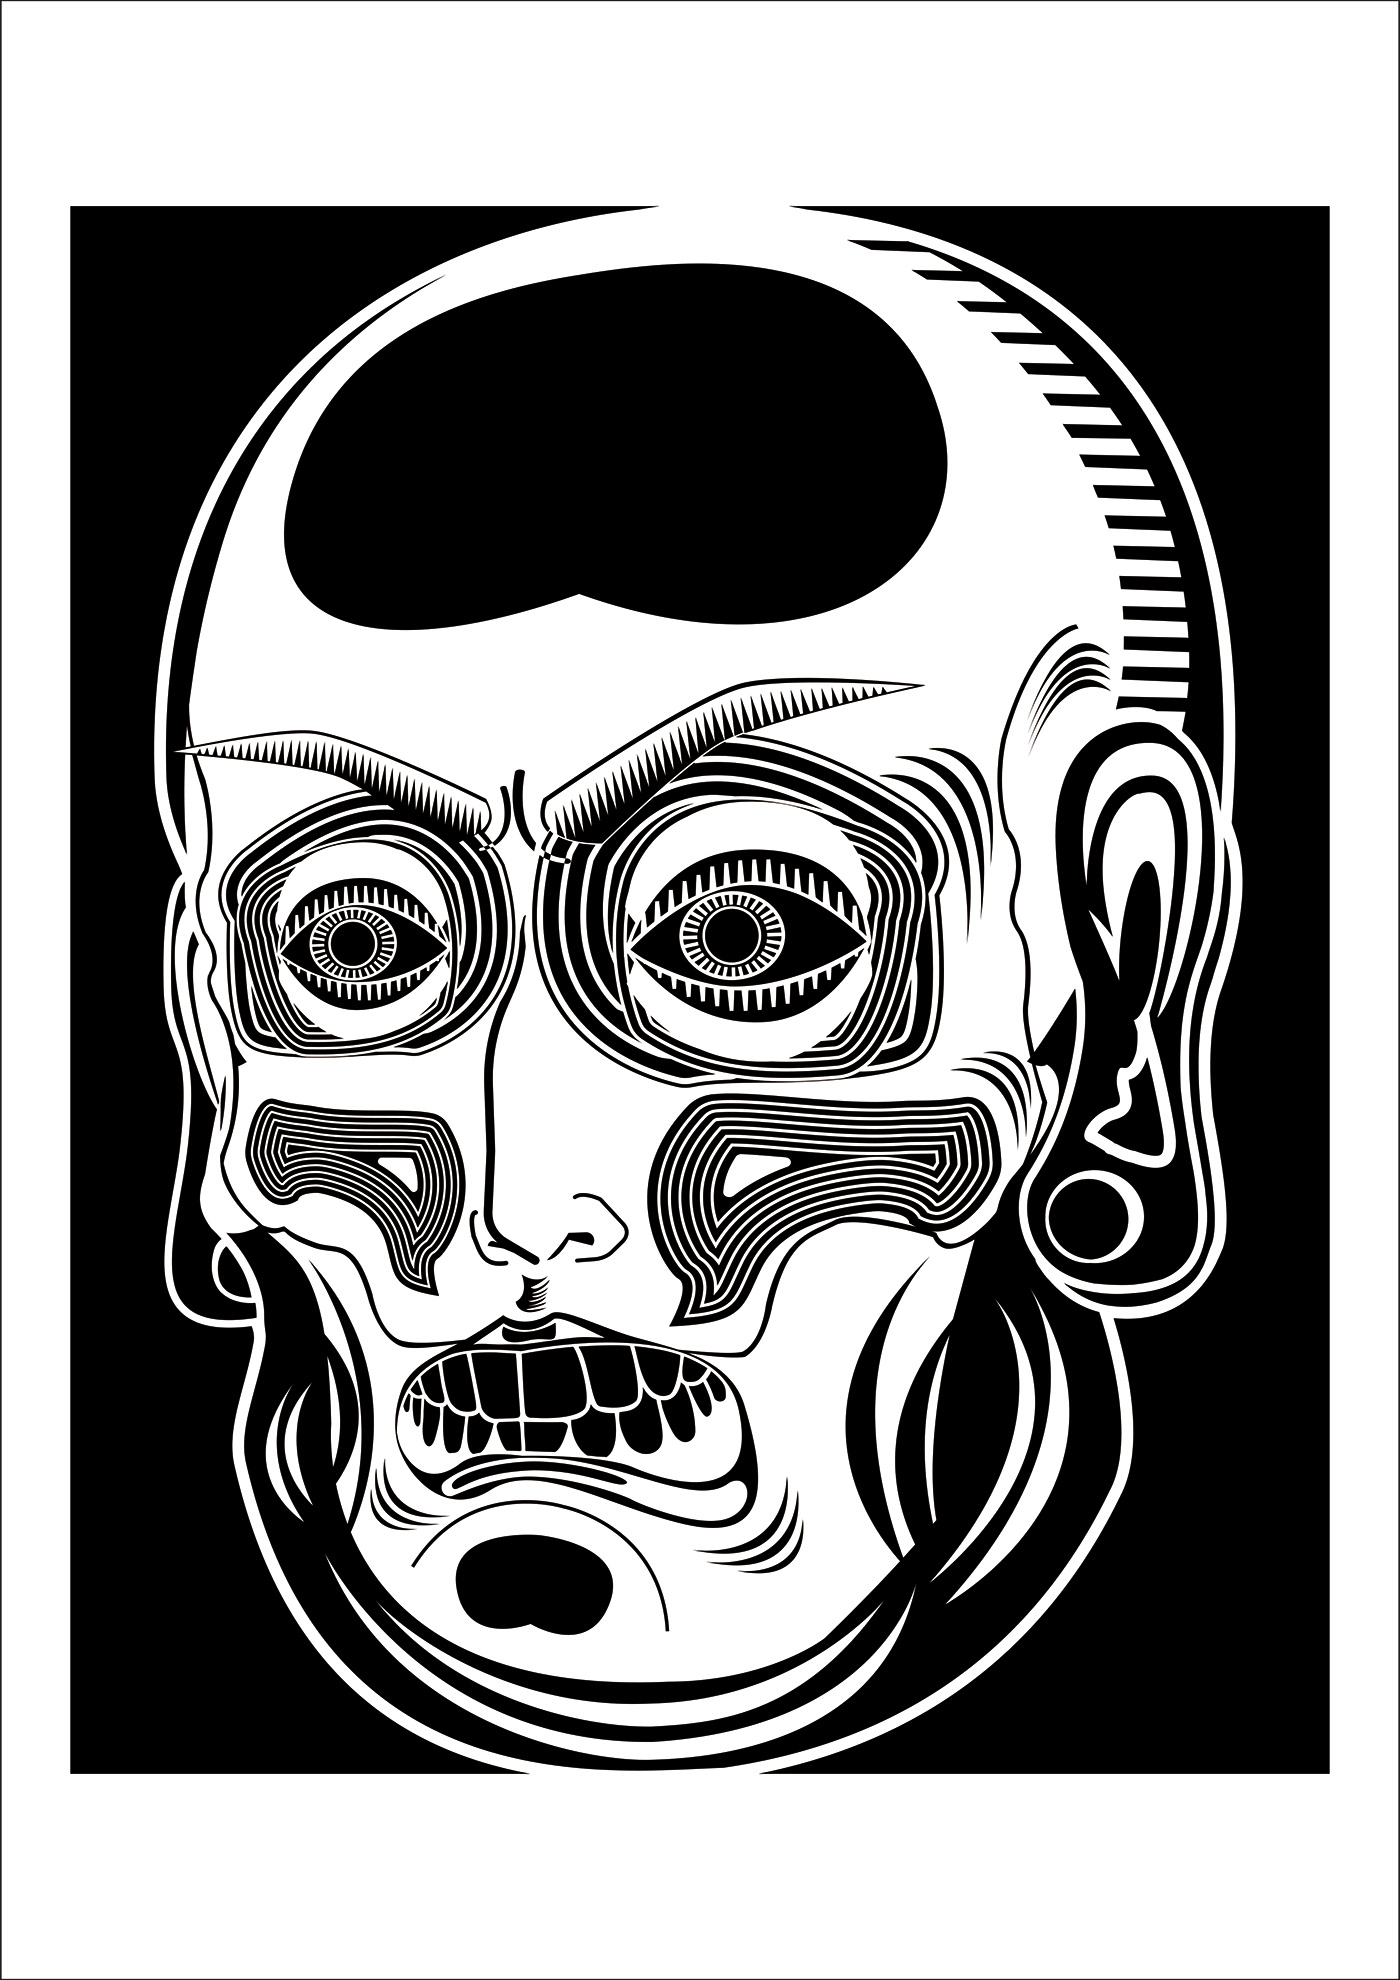 poster album cover rock alternative music Digital Art  adobe illustrator estampillas diseño gráfico